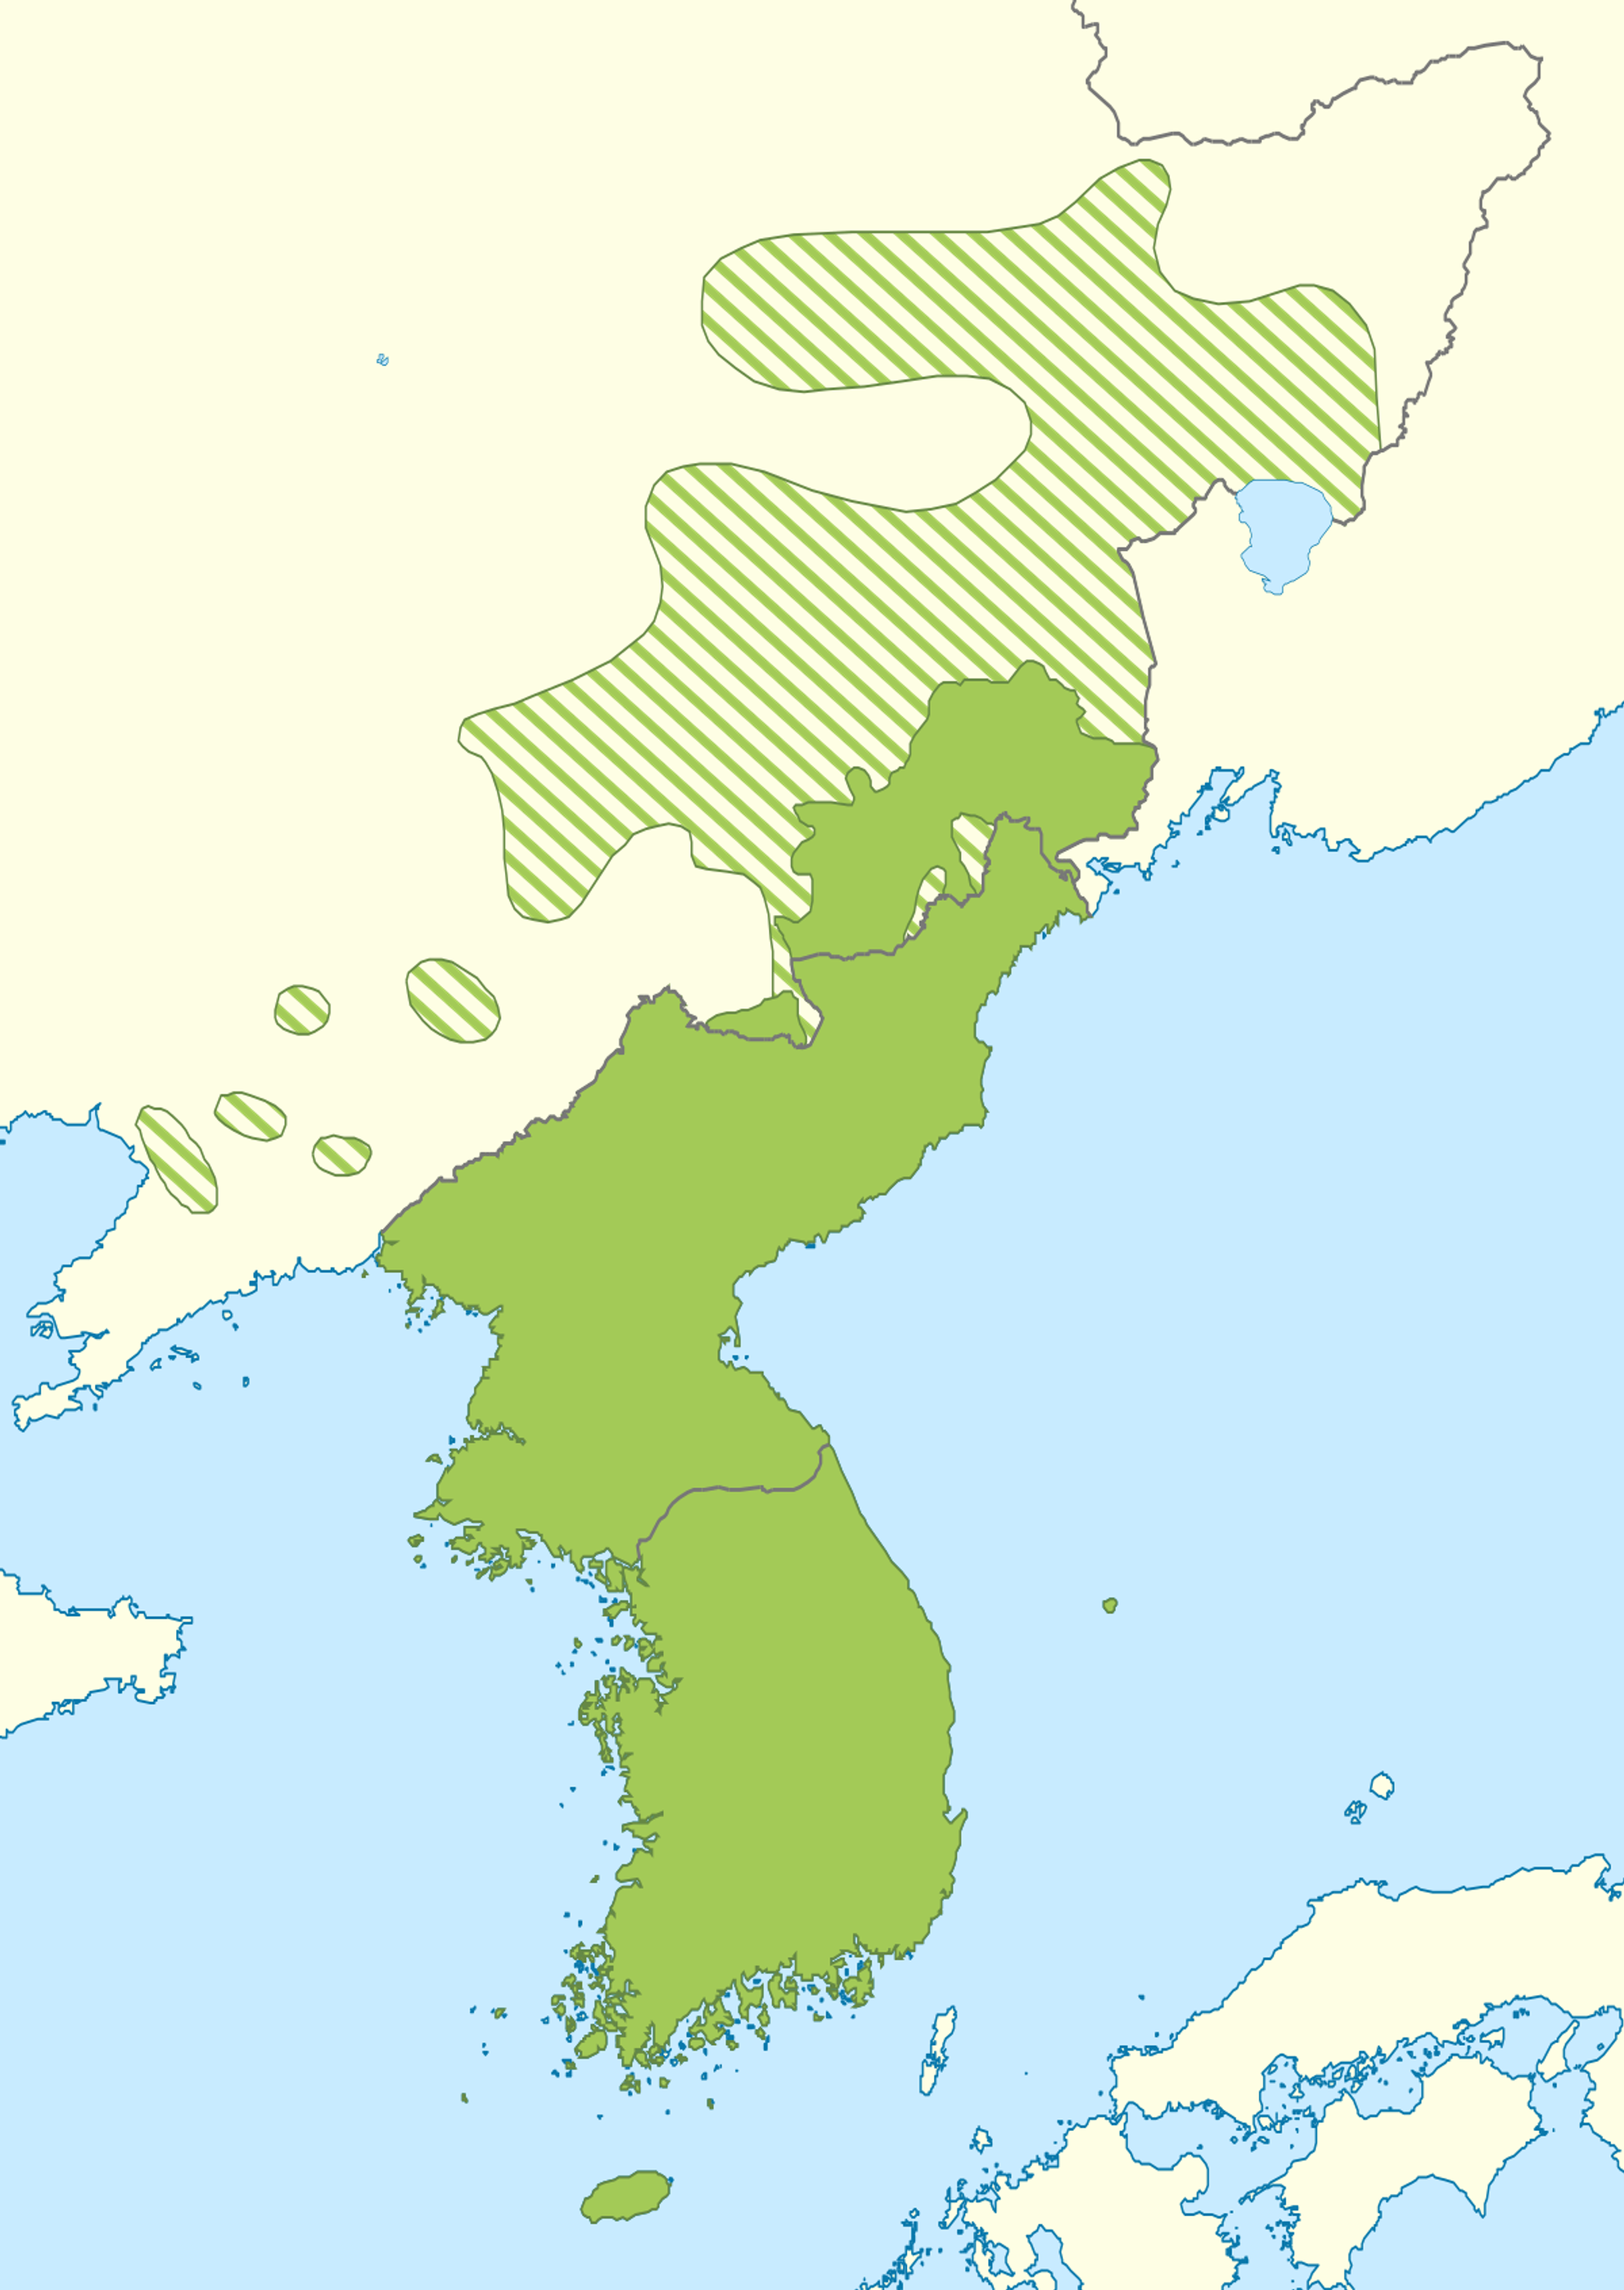 Koreanic languages